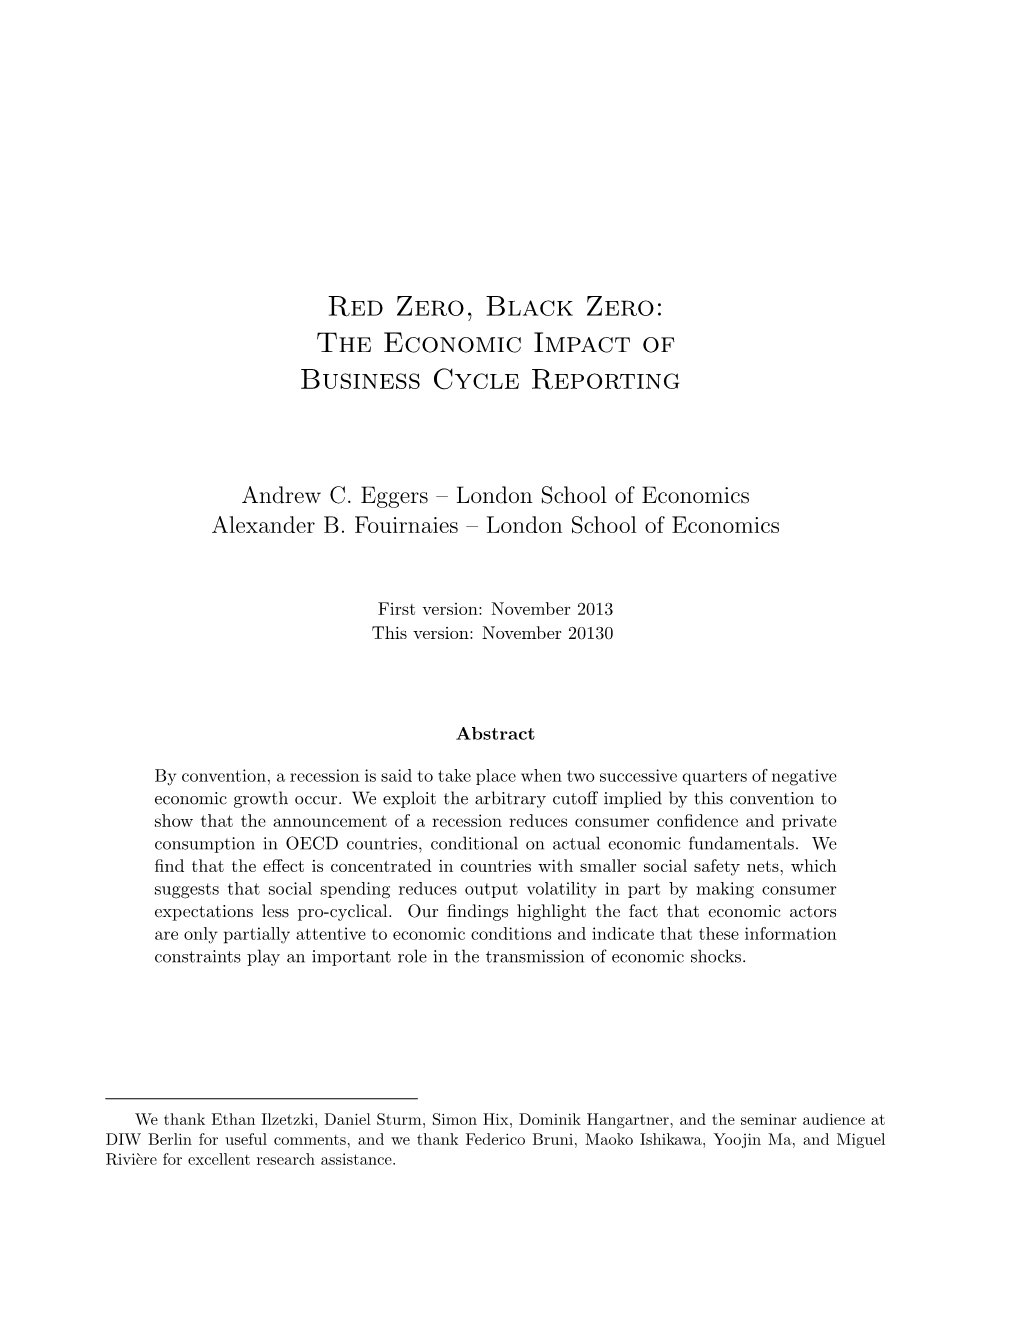 Red Zero, Black Zero: the Economic Impact of Business Cycle Reporting